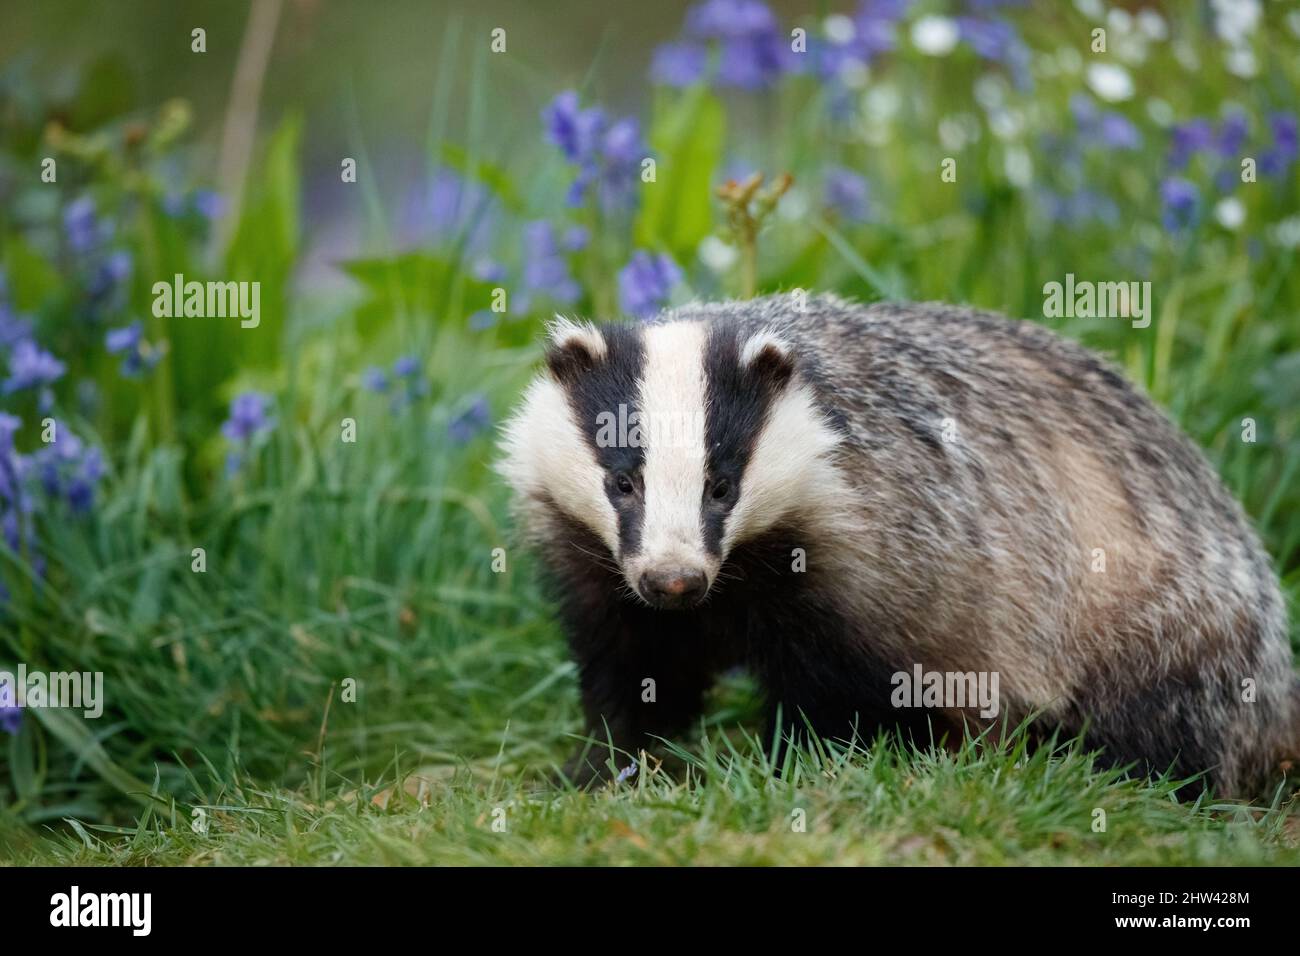 Badger emerging from sett surrounded by bluebells Stock Photo